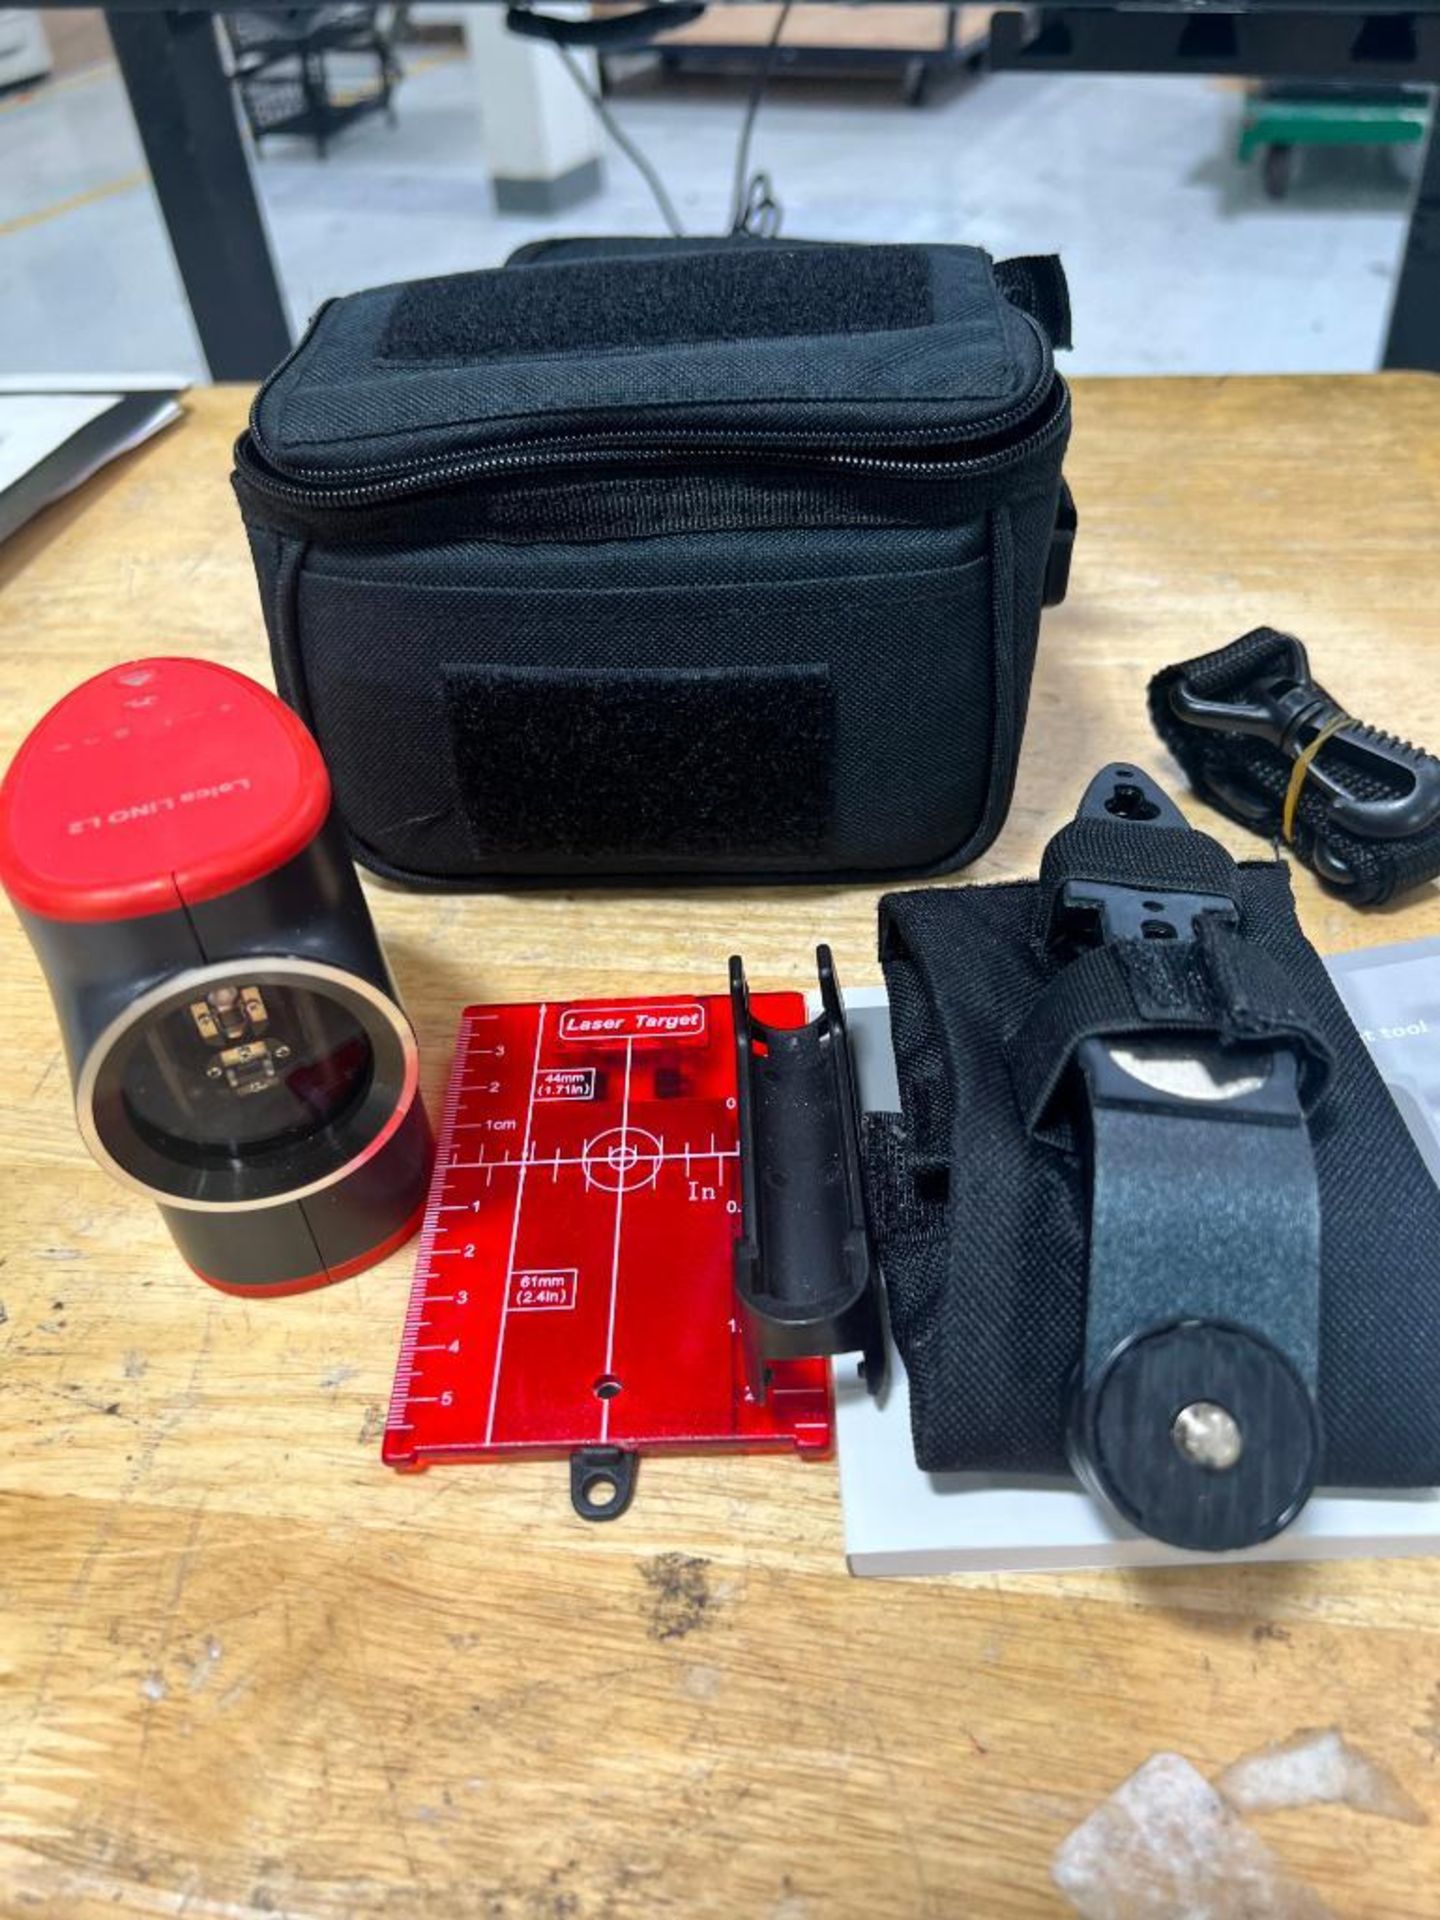 Leica Self-Leveling Alignment Tool, Model LINOL2